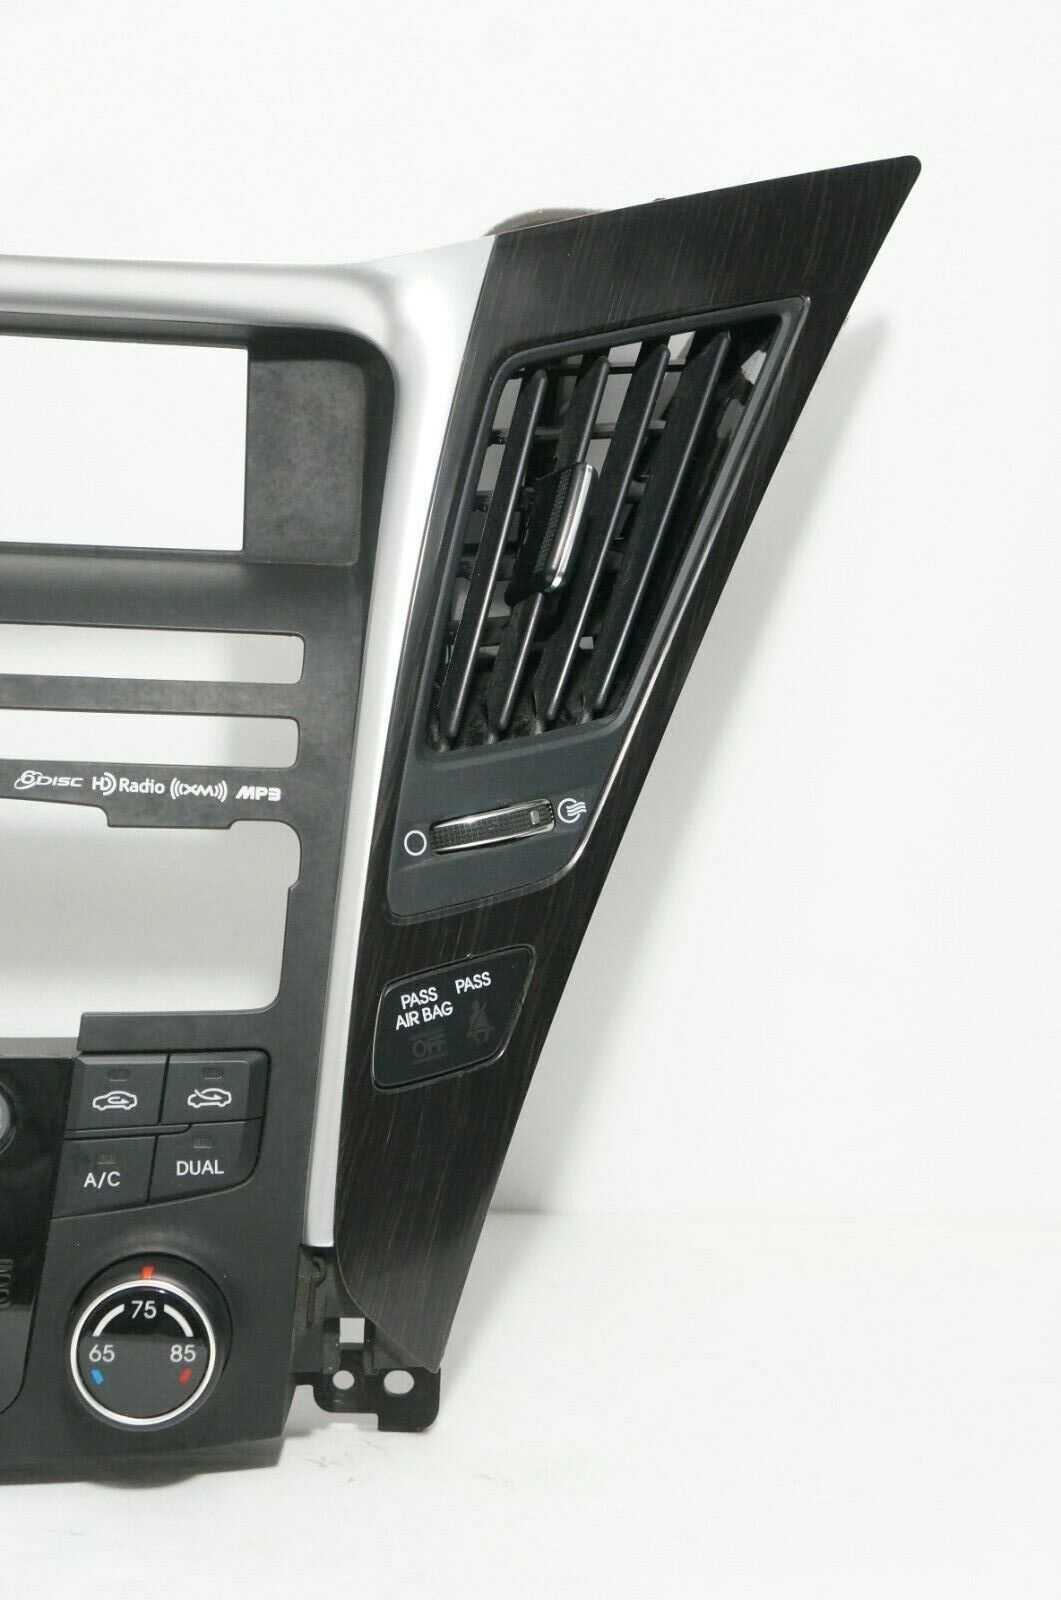 11-13 Hyundai Sonata Auto Dual AC Temperature Climate Control OEM 97250-3QDA1 Alshned Auto Parts